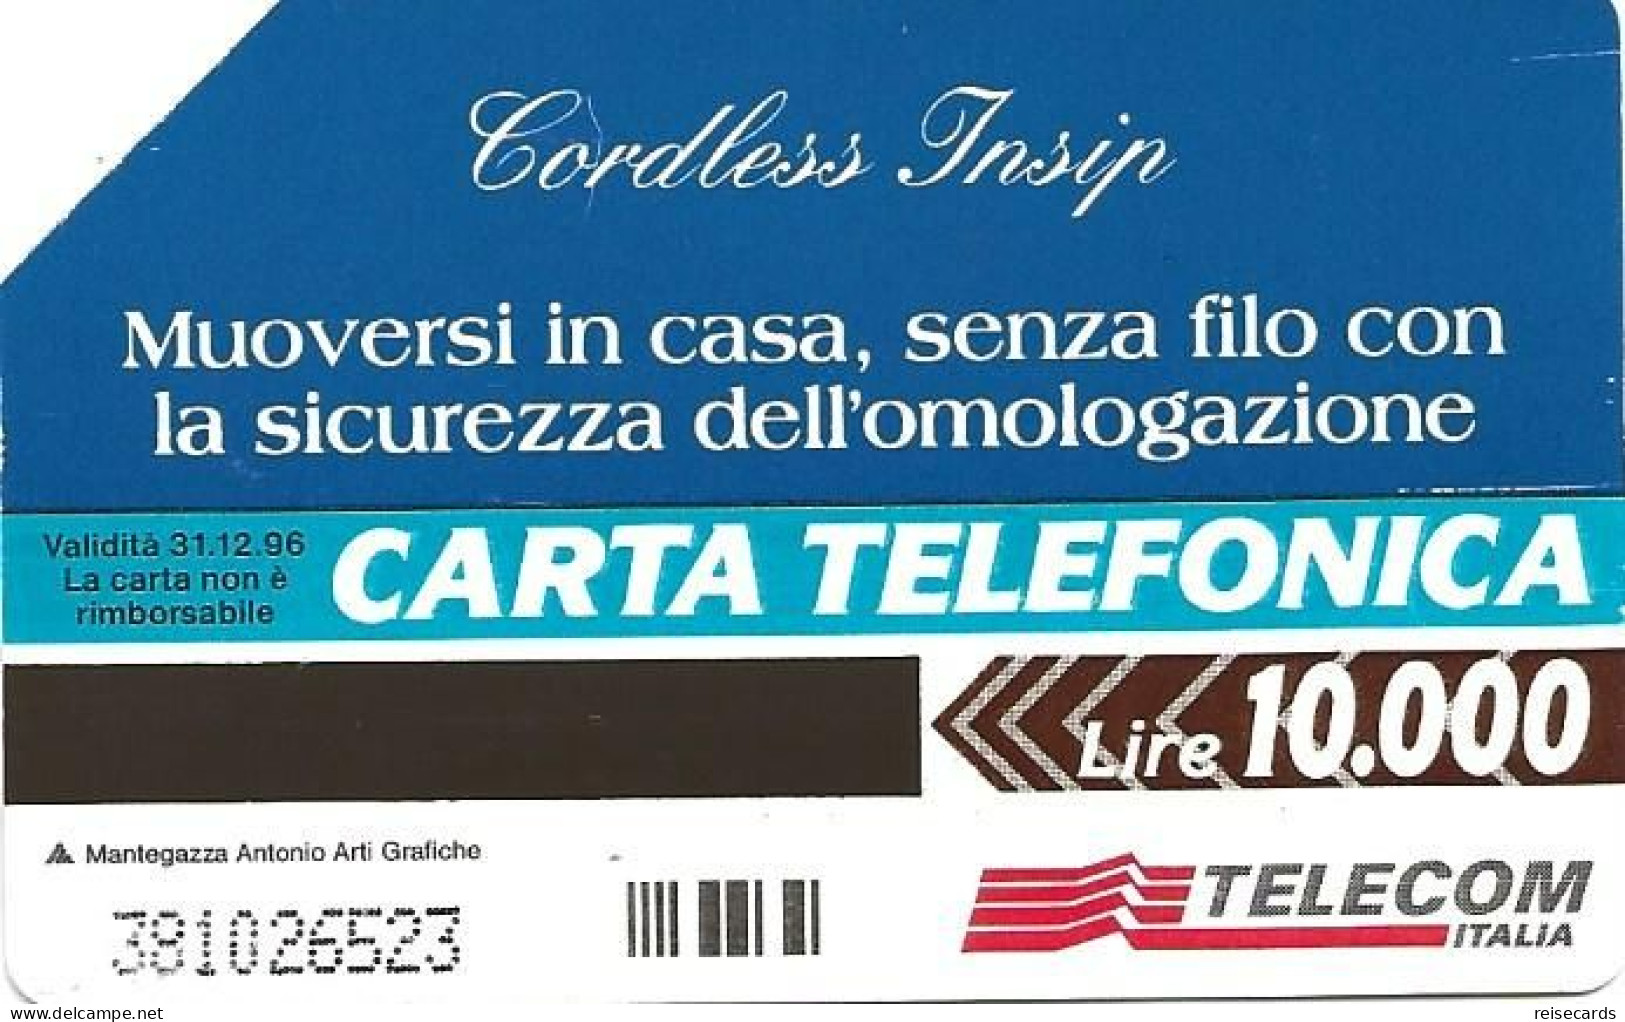 Italy: Telecom Italia - Cordless Insip - Public Advertising